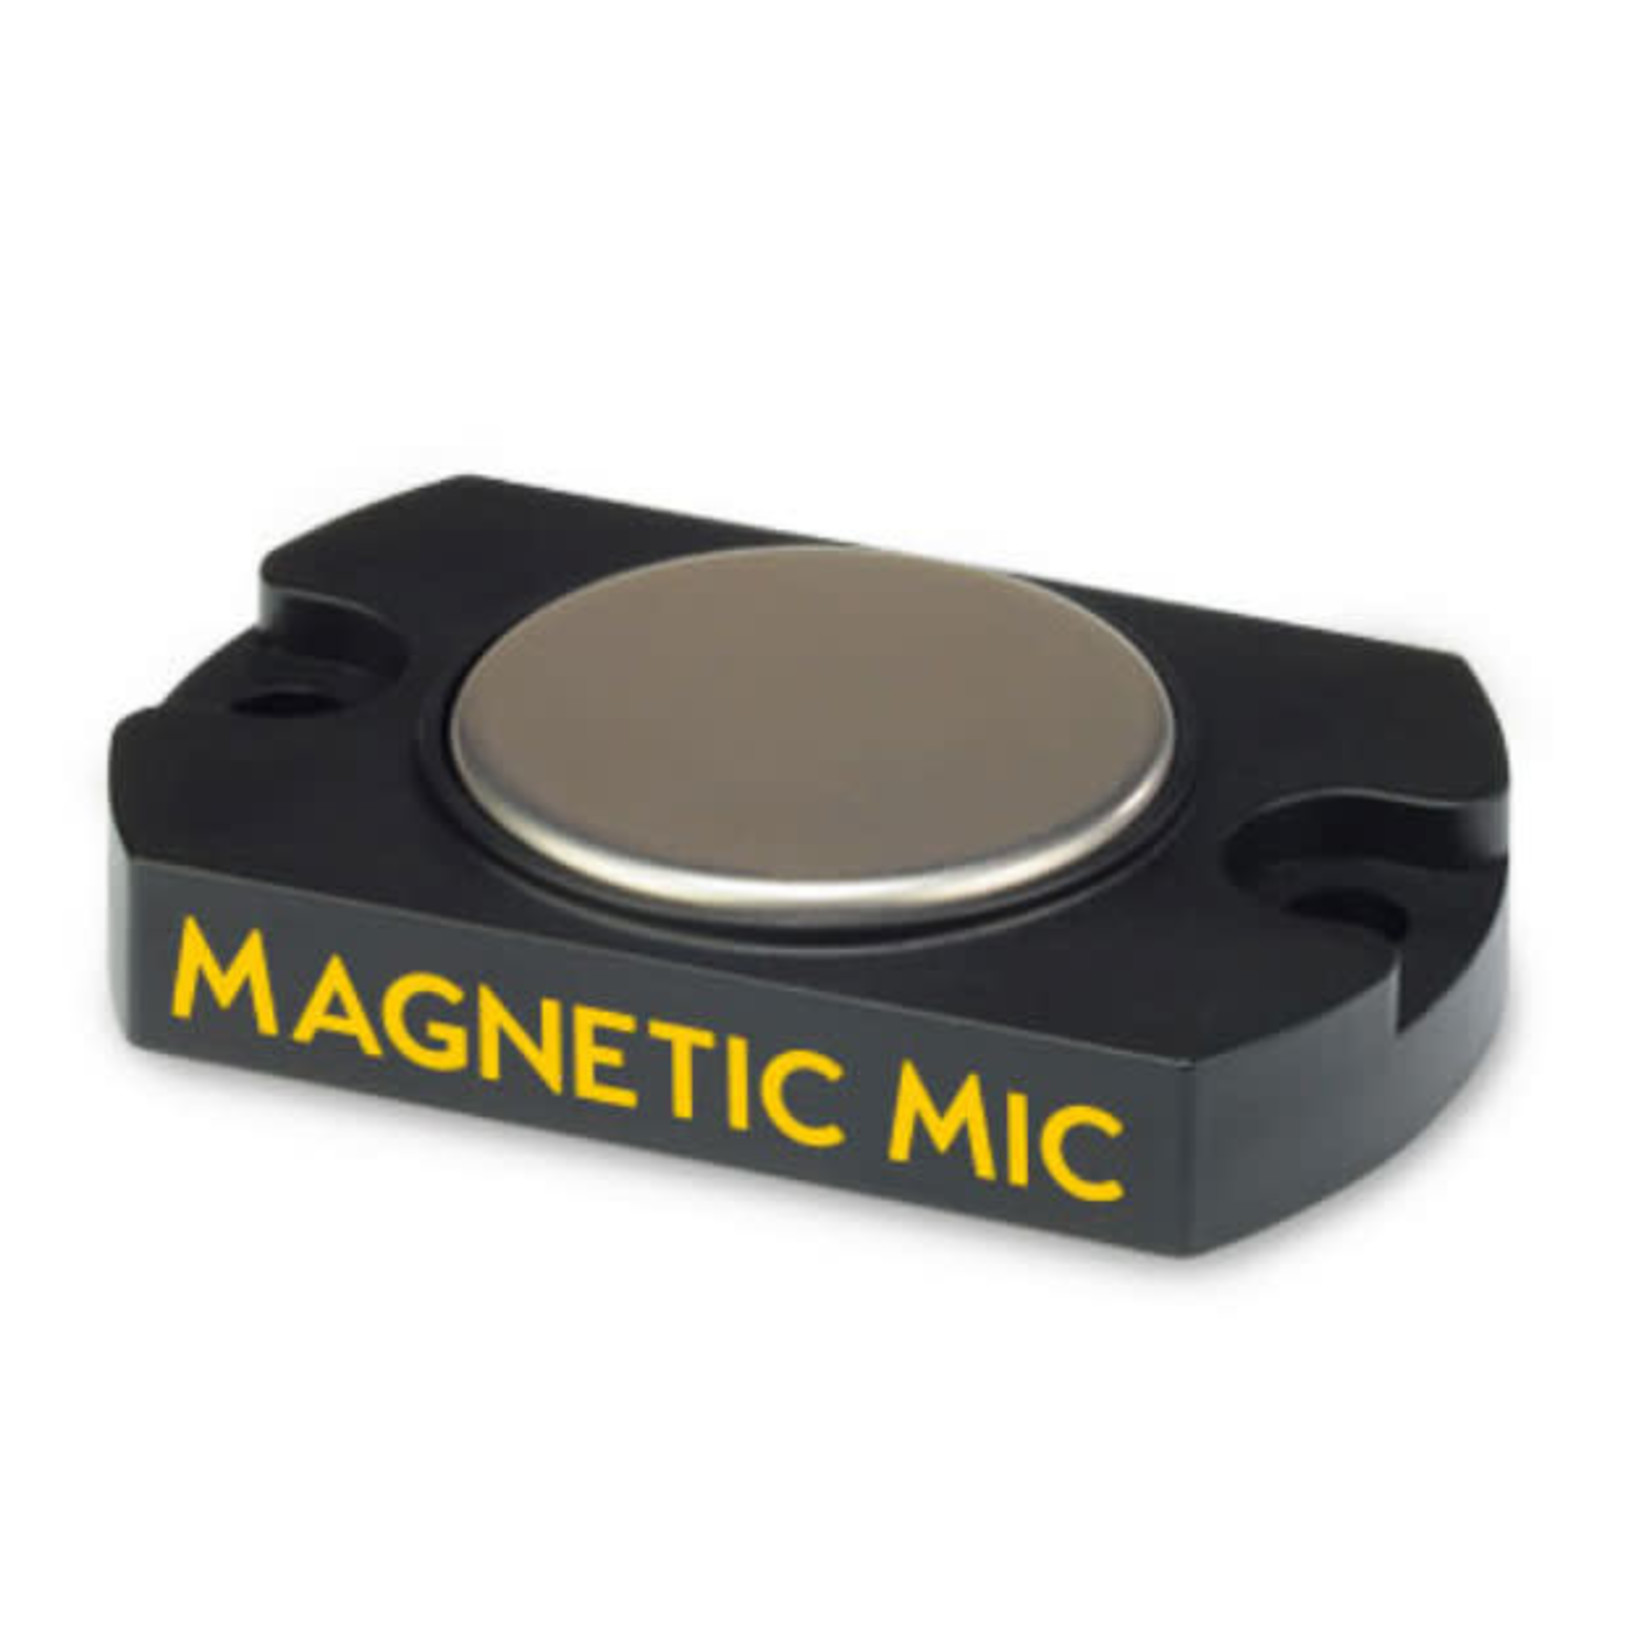 Magnetic Mic Magnetic Mic